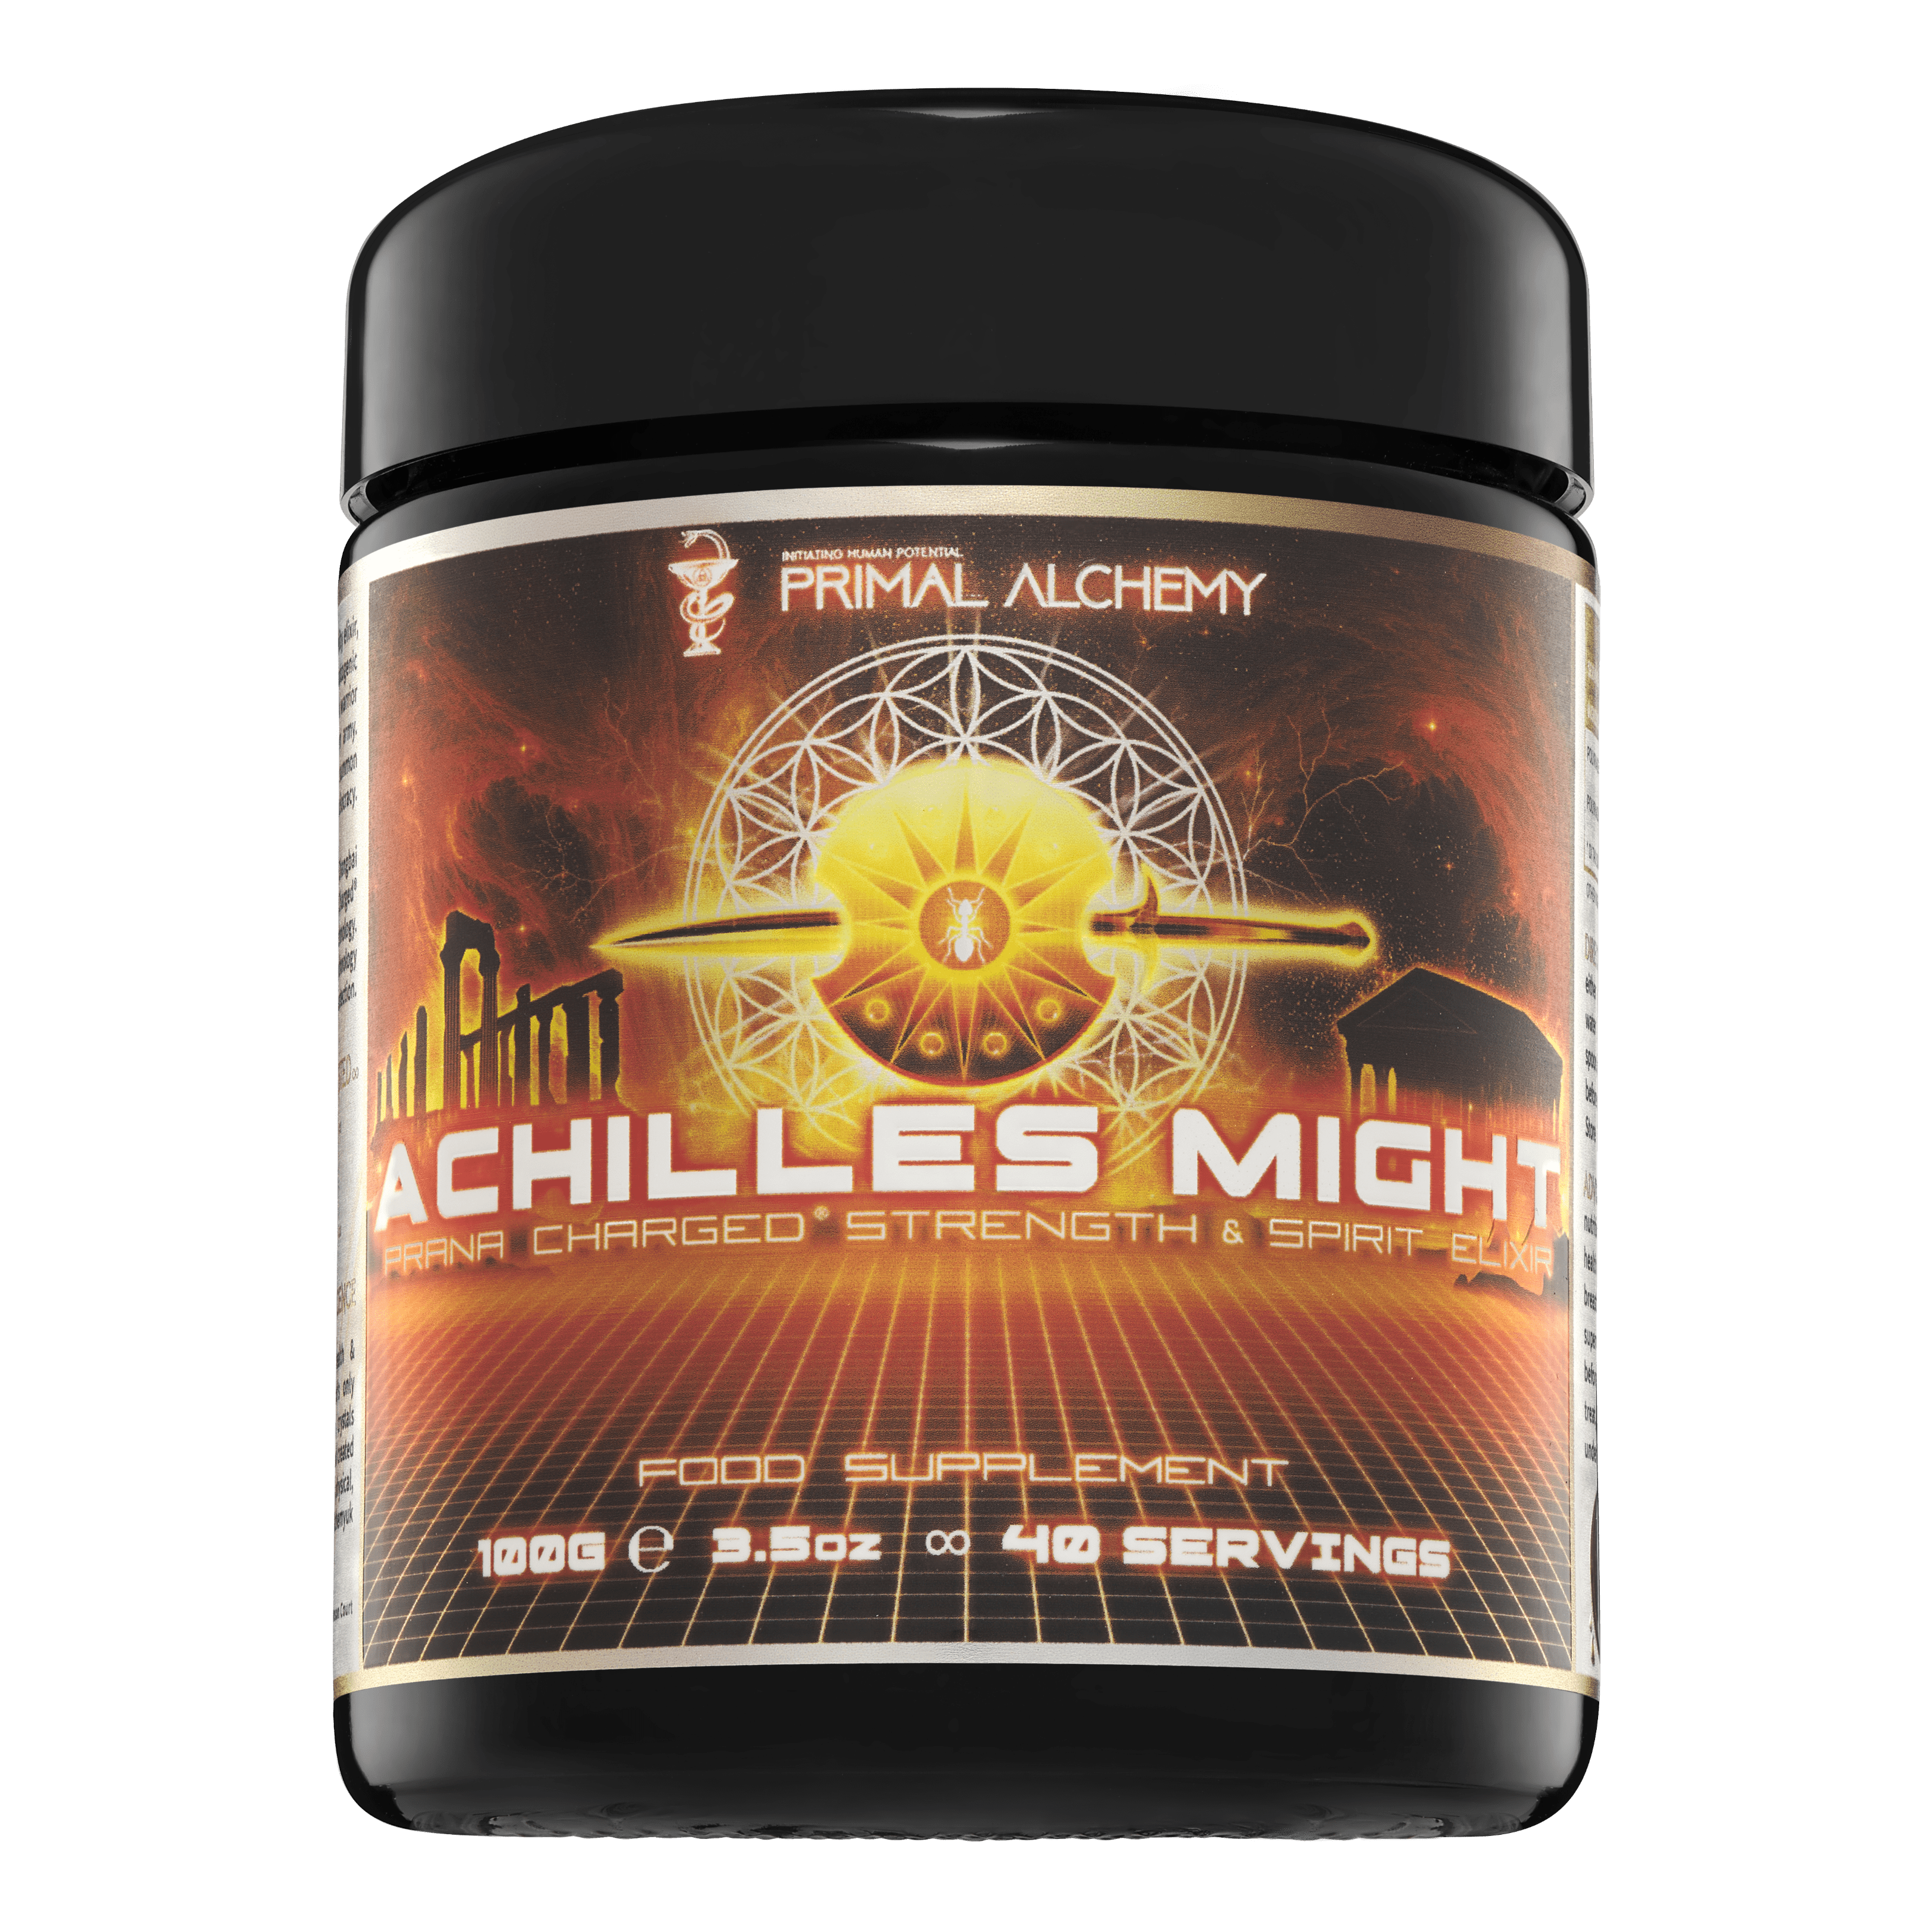 Achilles Might ∞ Prana Charged® Strength & Spirit Elixir - PrimalAlchemy